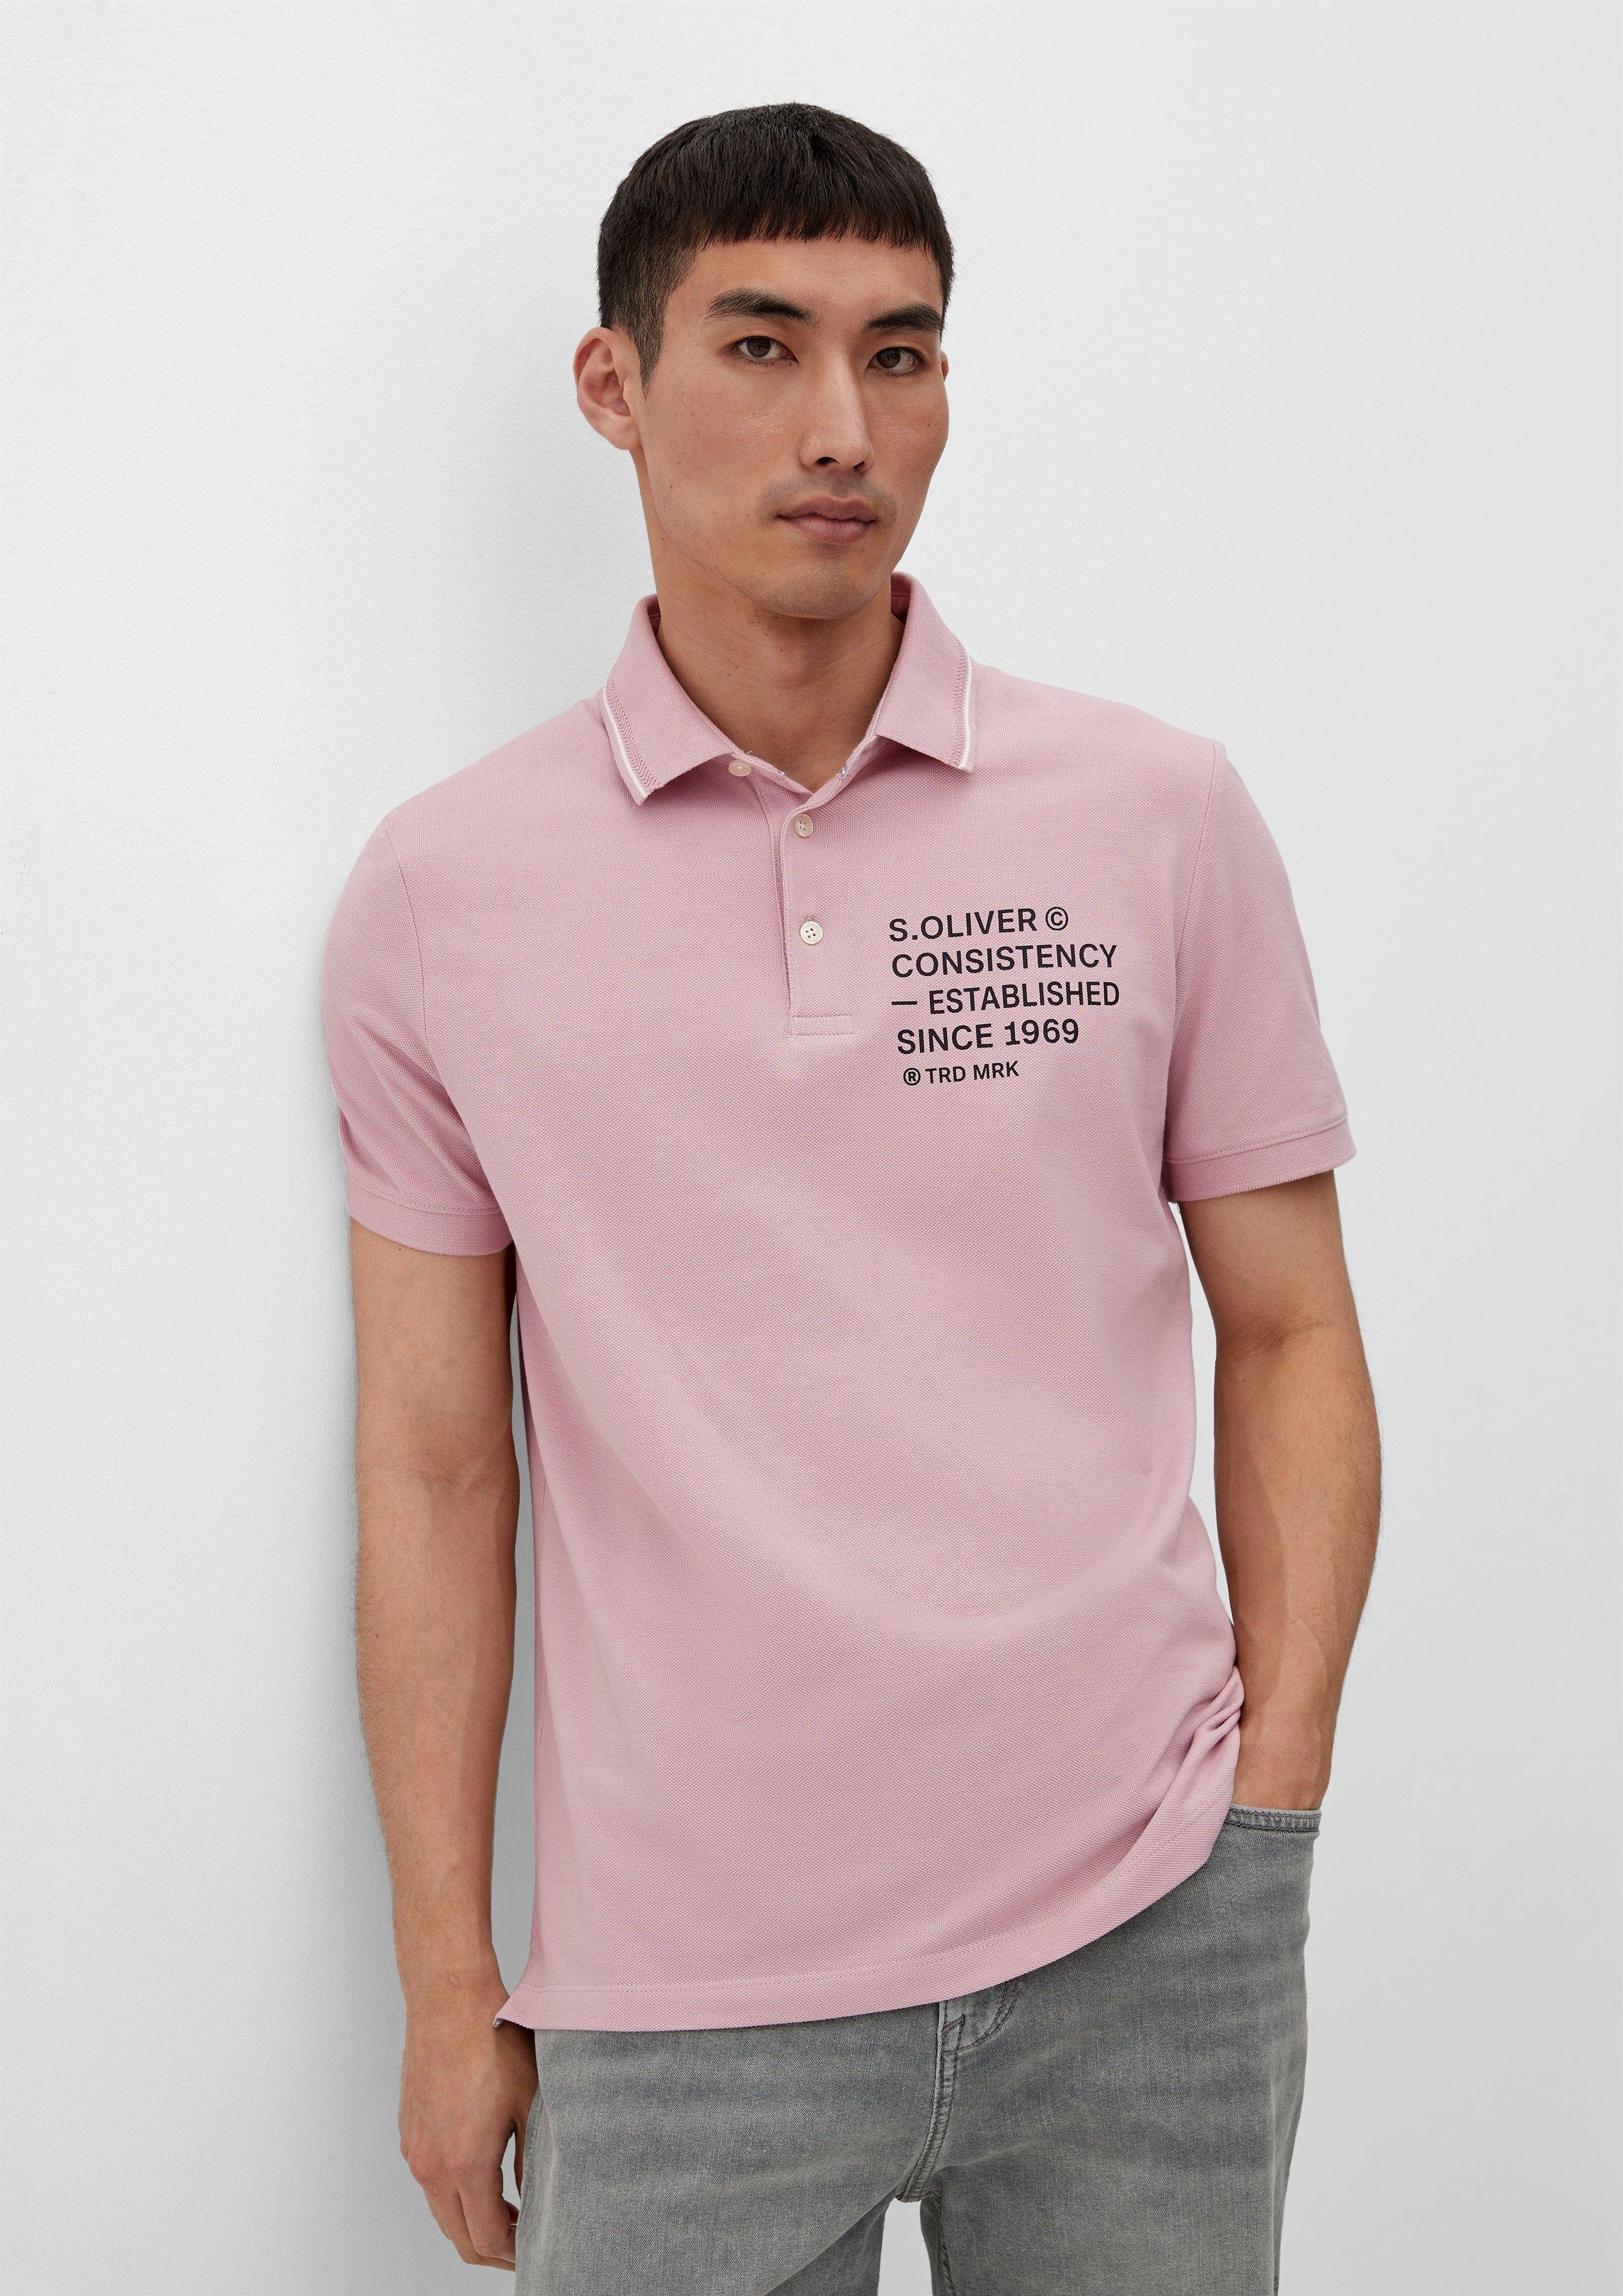 s.Oliver Kurzarmshirt Poloshirt mit Blende zartrosa Artwork, Piquéstruktur